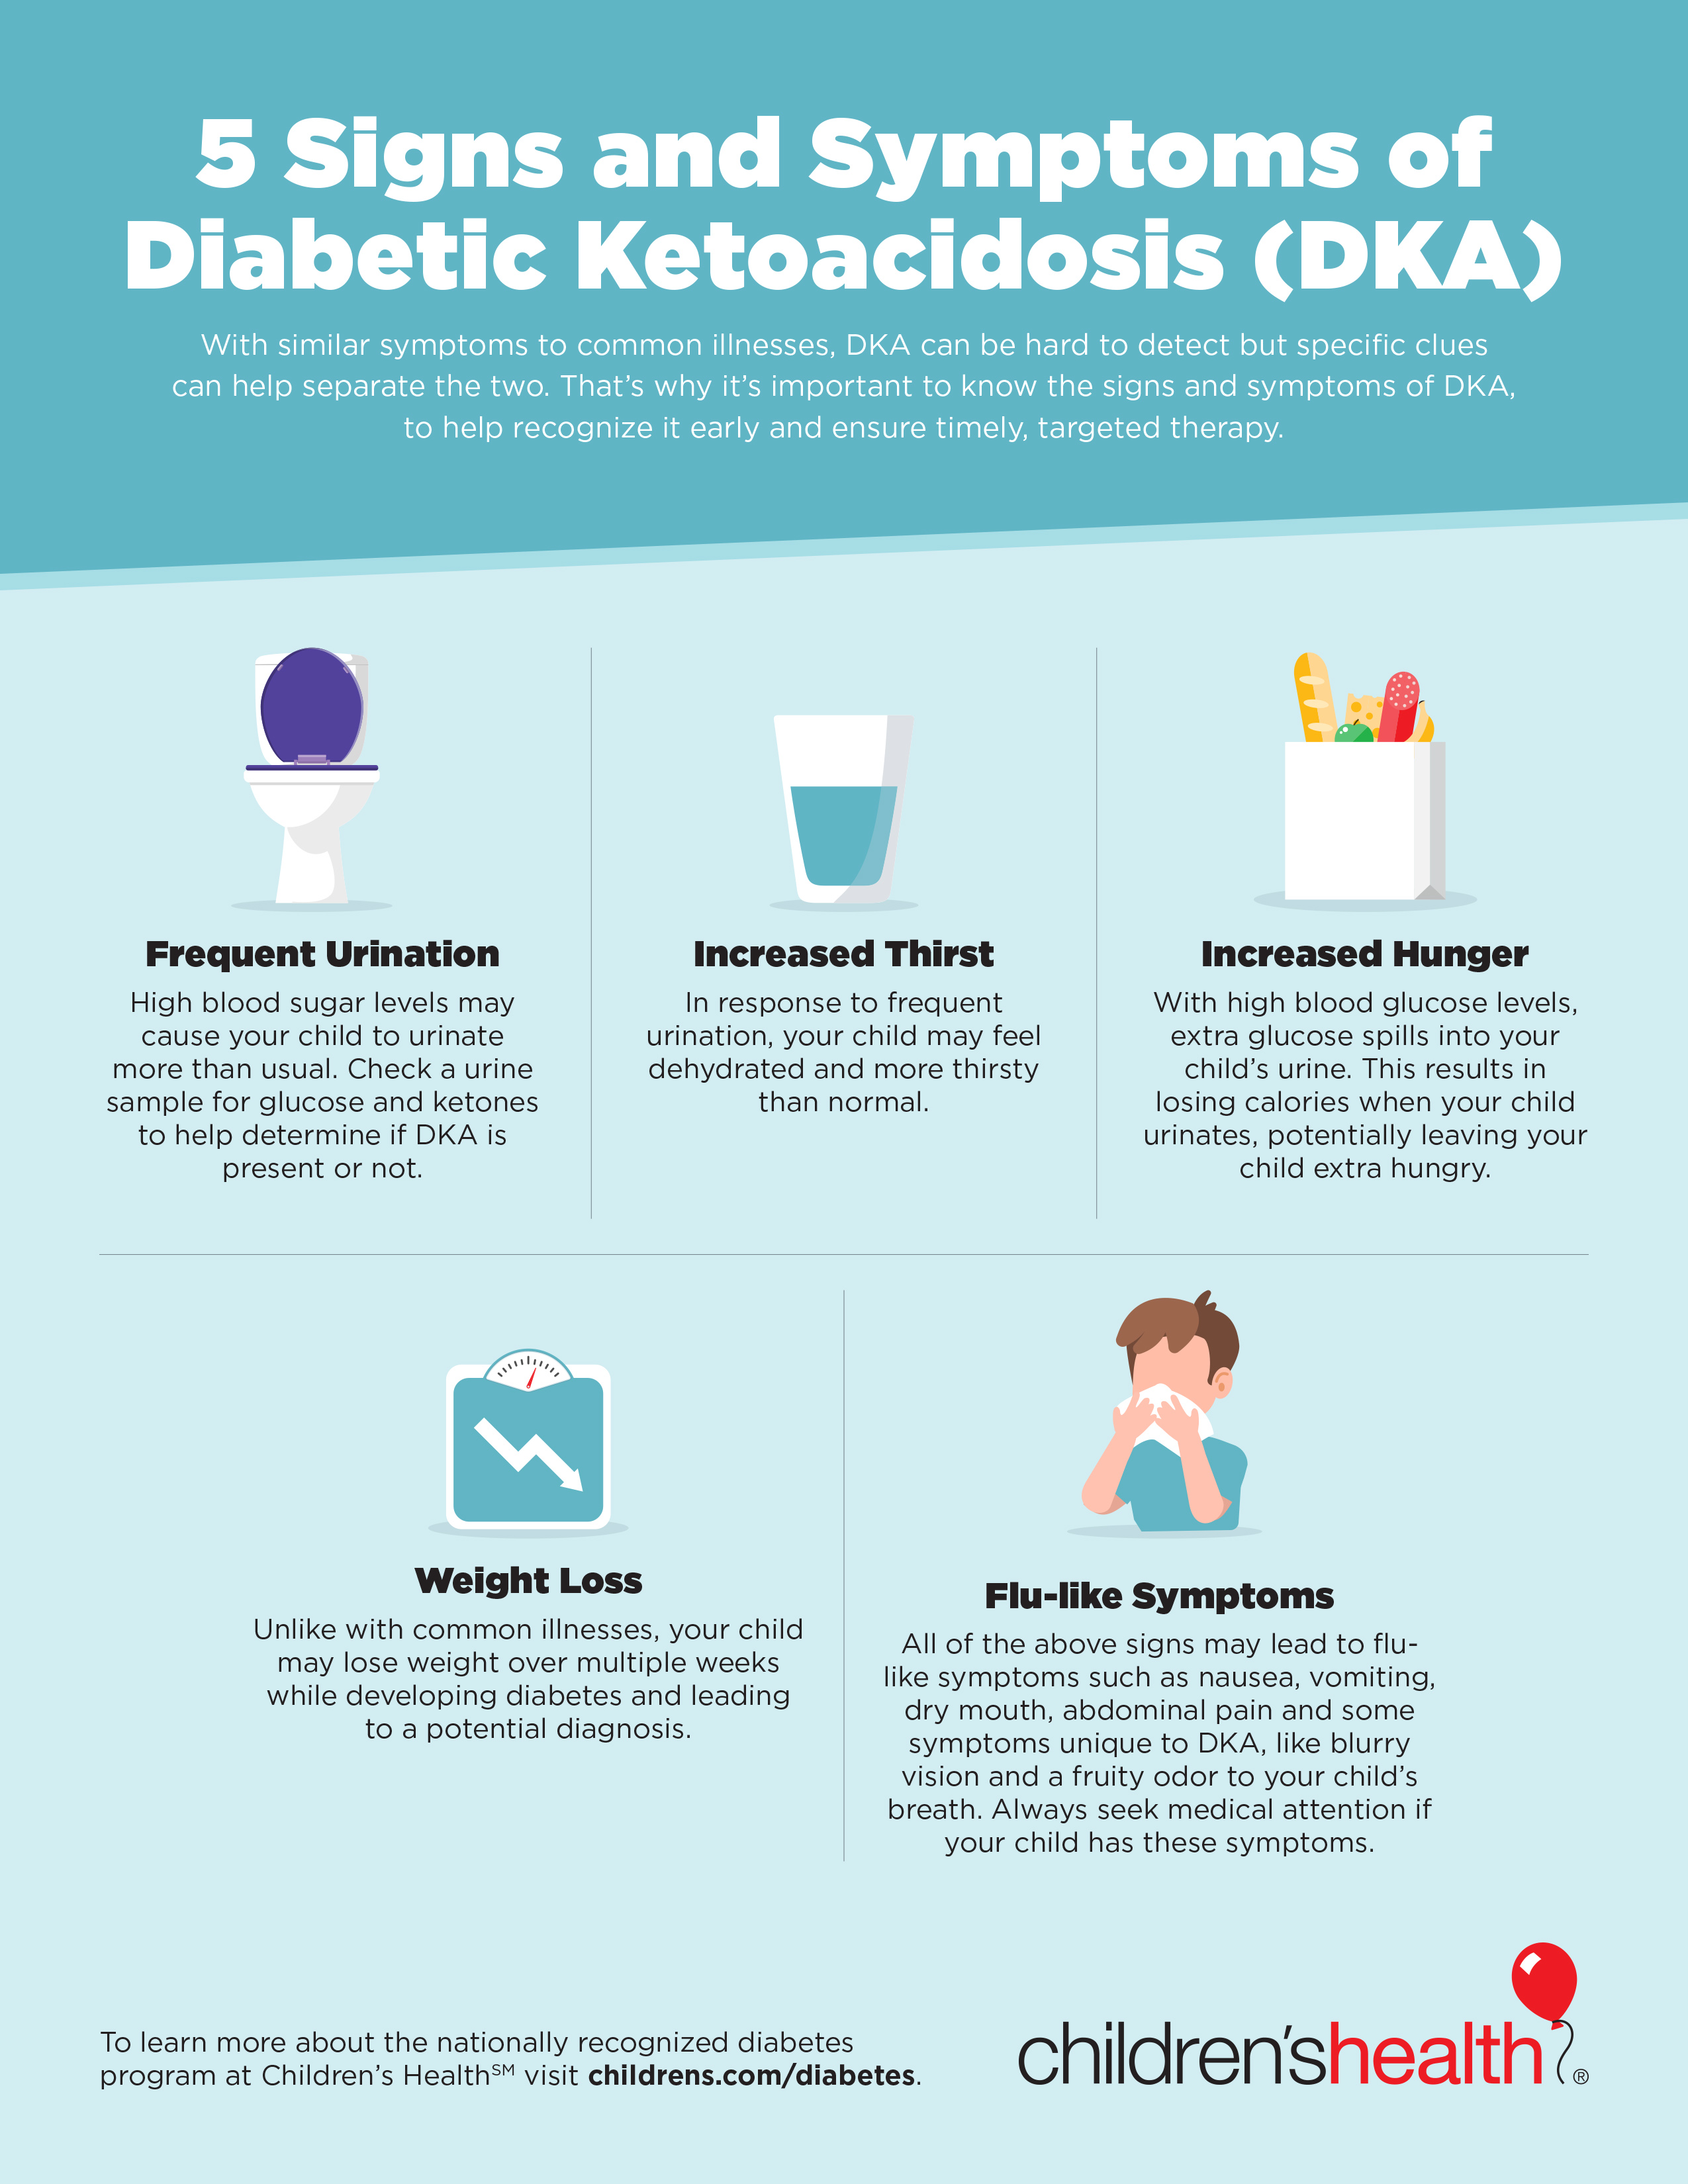 Life-threatening DKA symptoms